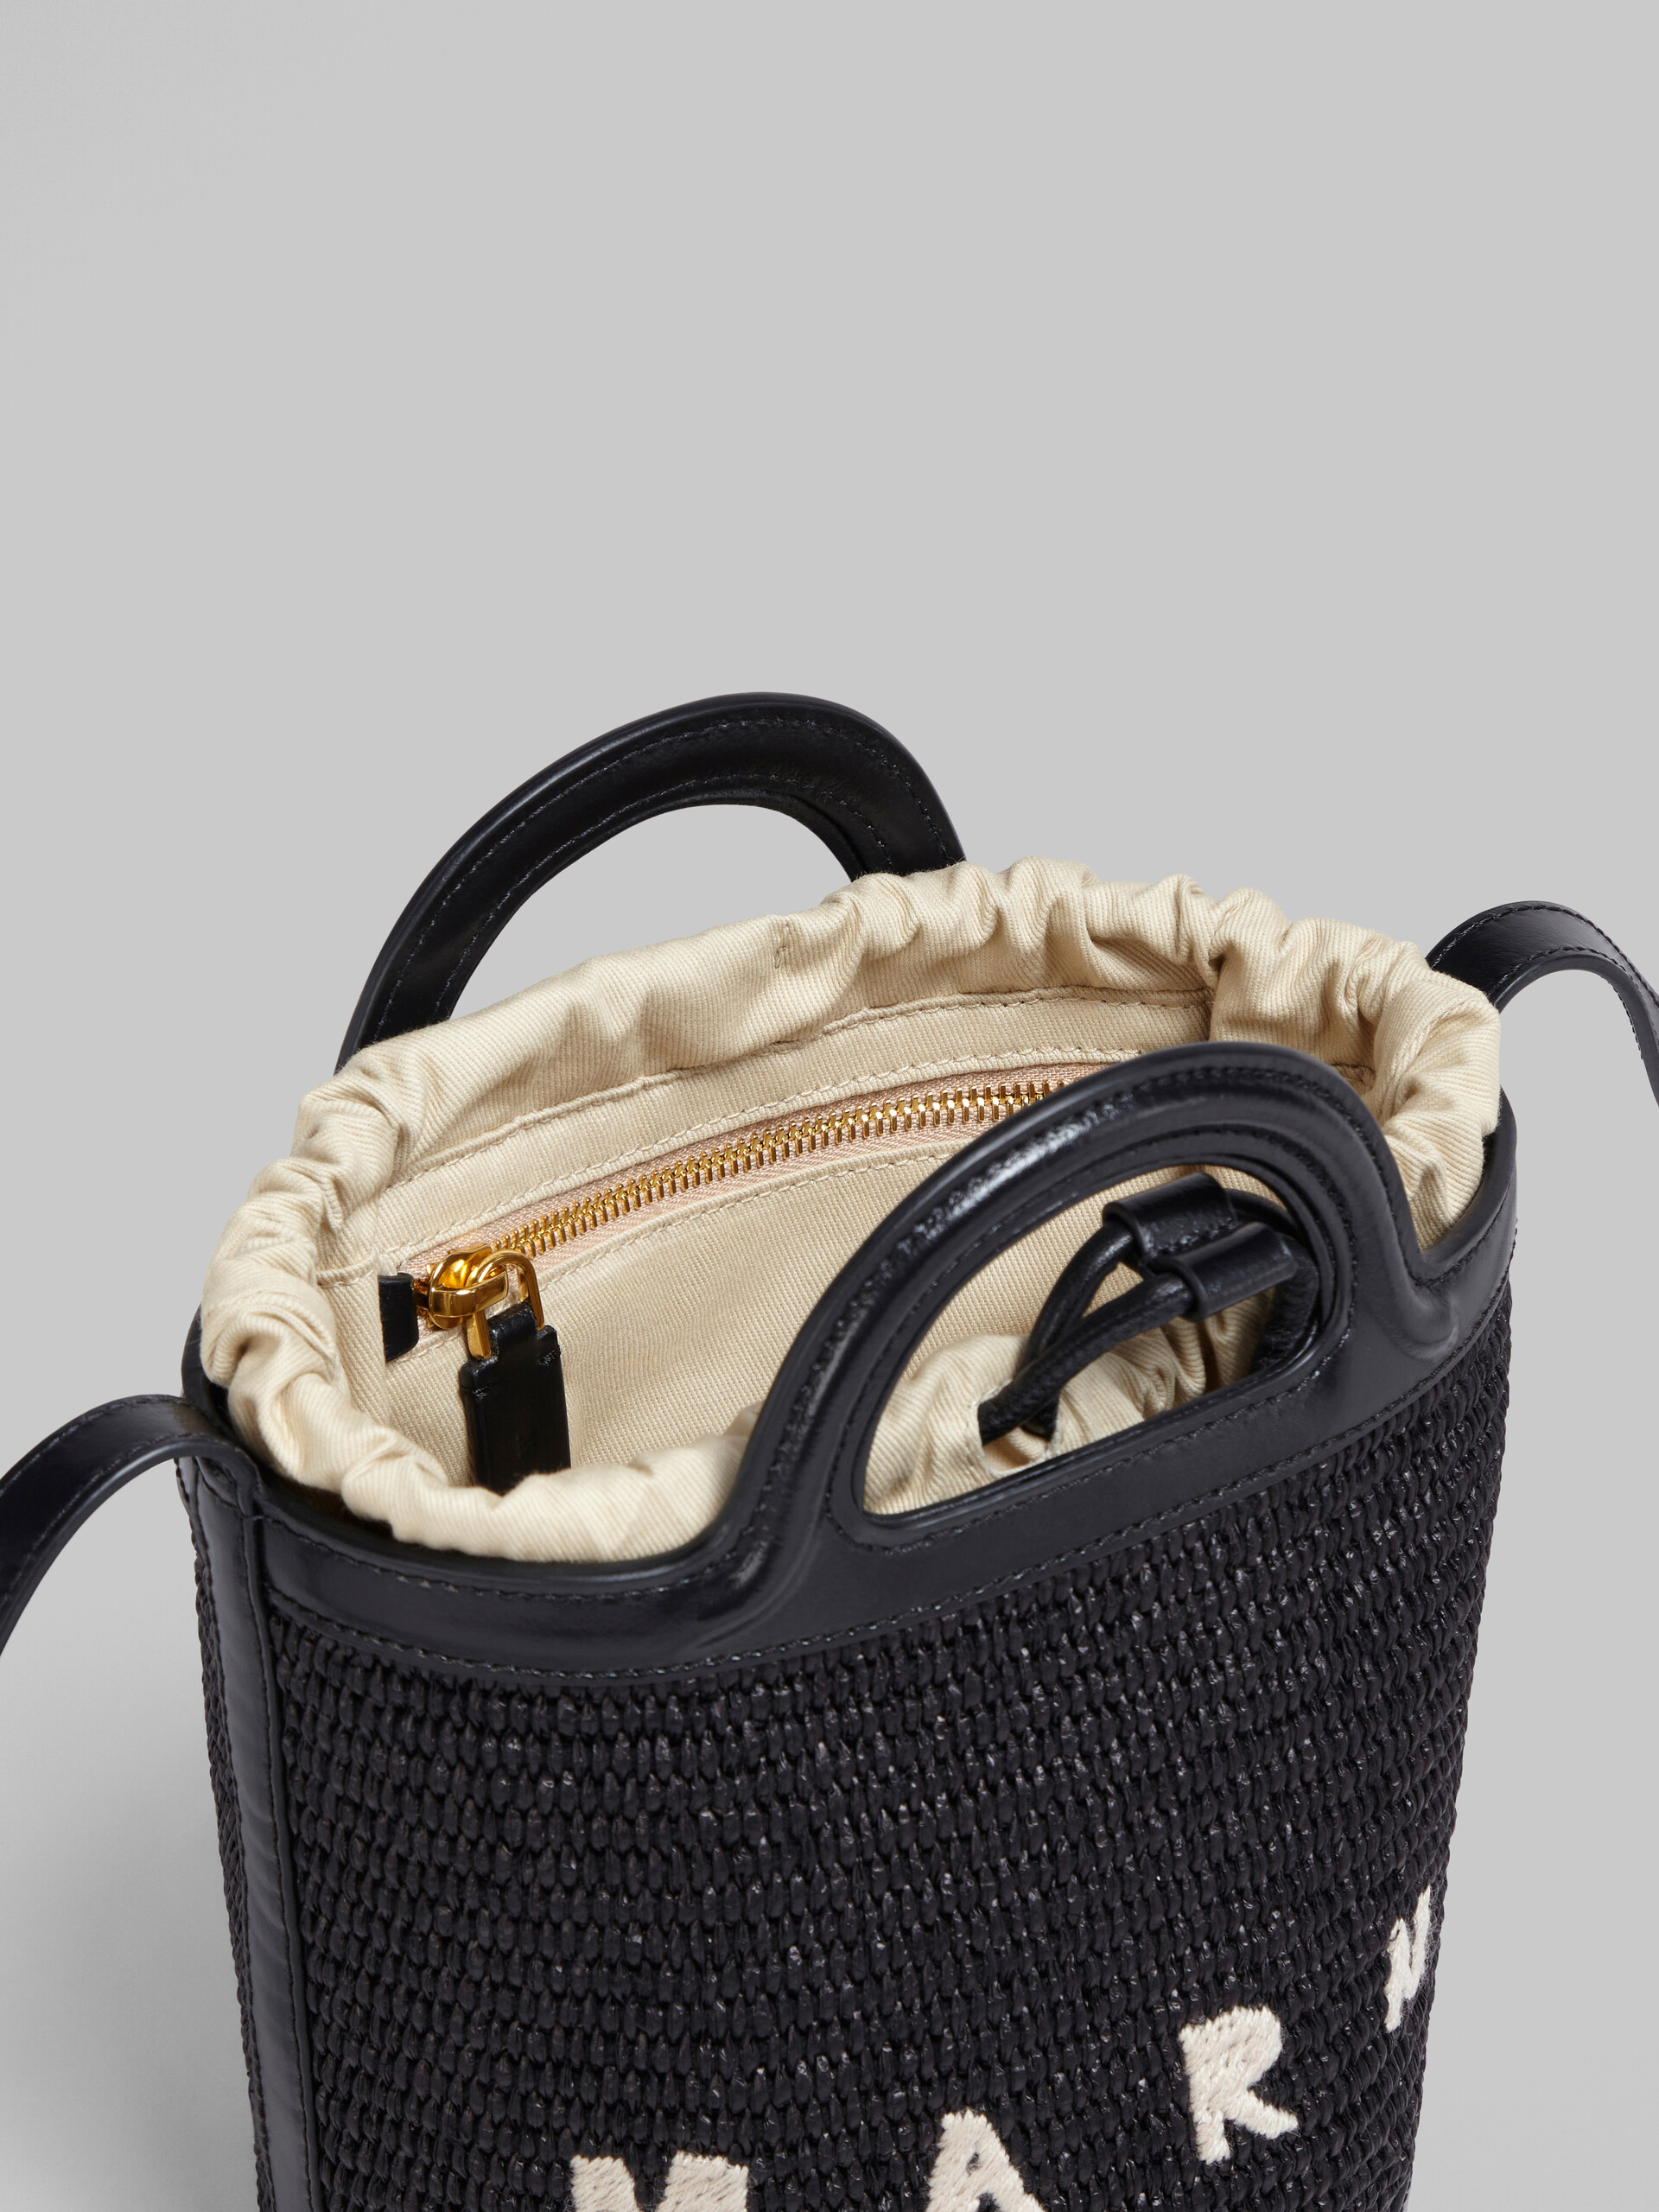 TROPICALIA mini bucket bag in black leather and raffia - Shoulder Bag - Image 4